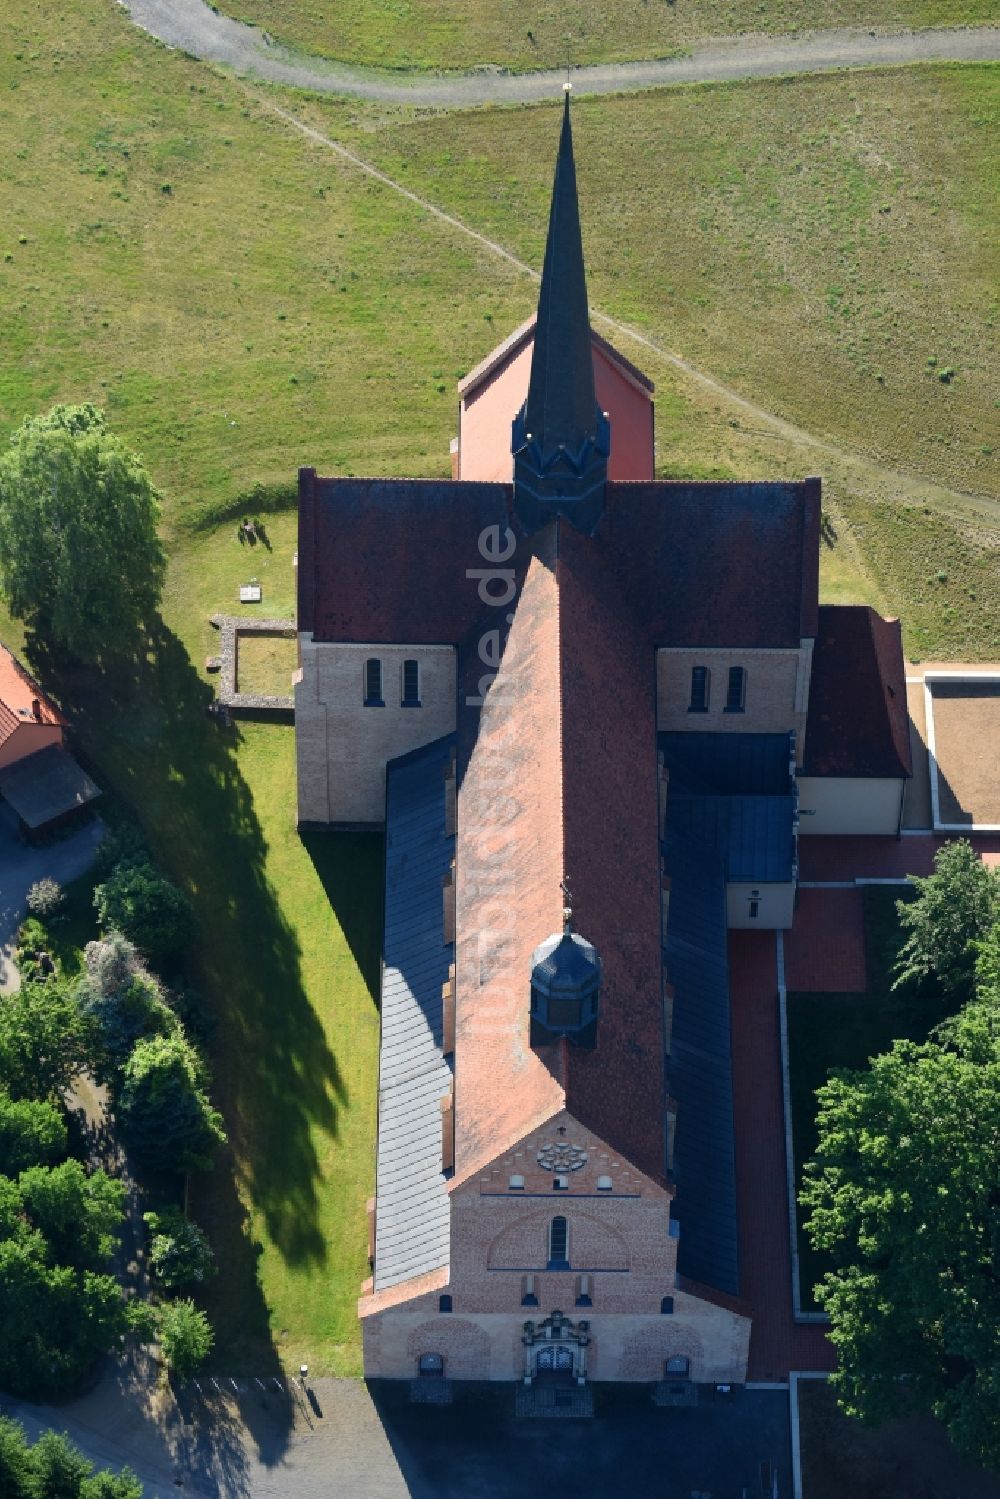 Luftaufnahme Doberlug-Kirchhain - Kirchengebäude der Evang. Klosterkirche St. Marien Doberlug in Doberlug-Kirchhain im Bundesland Brandenburg, Deutschland